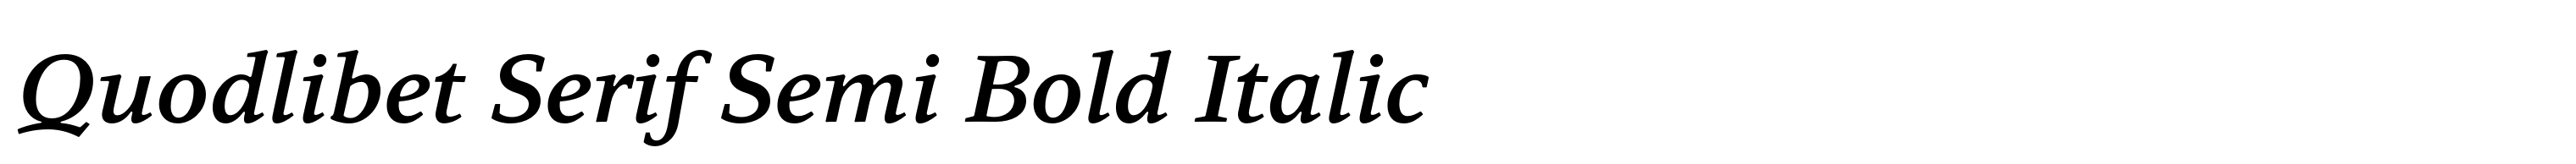 Quodlibet Serif Semi Bold Italic